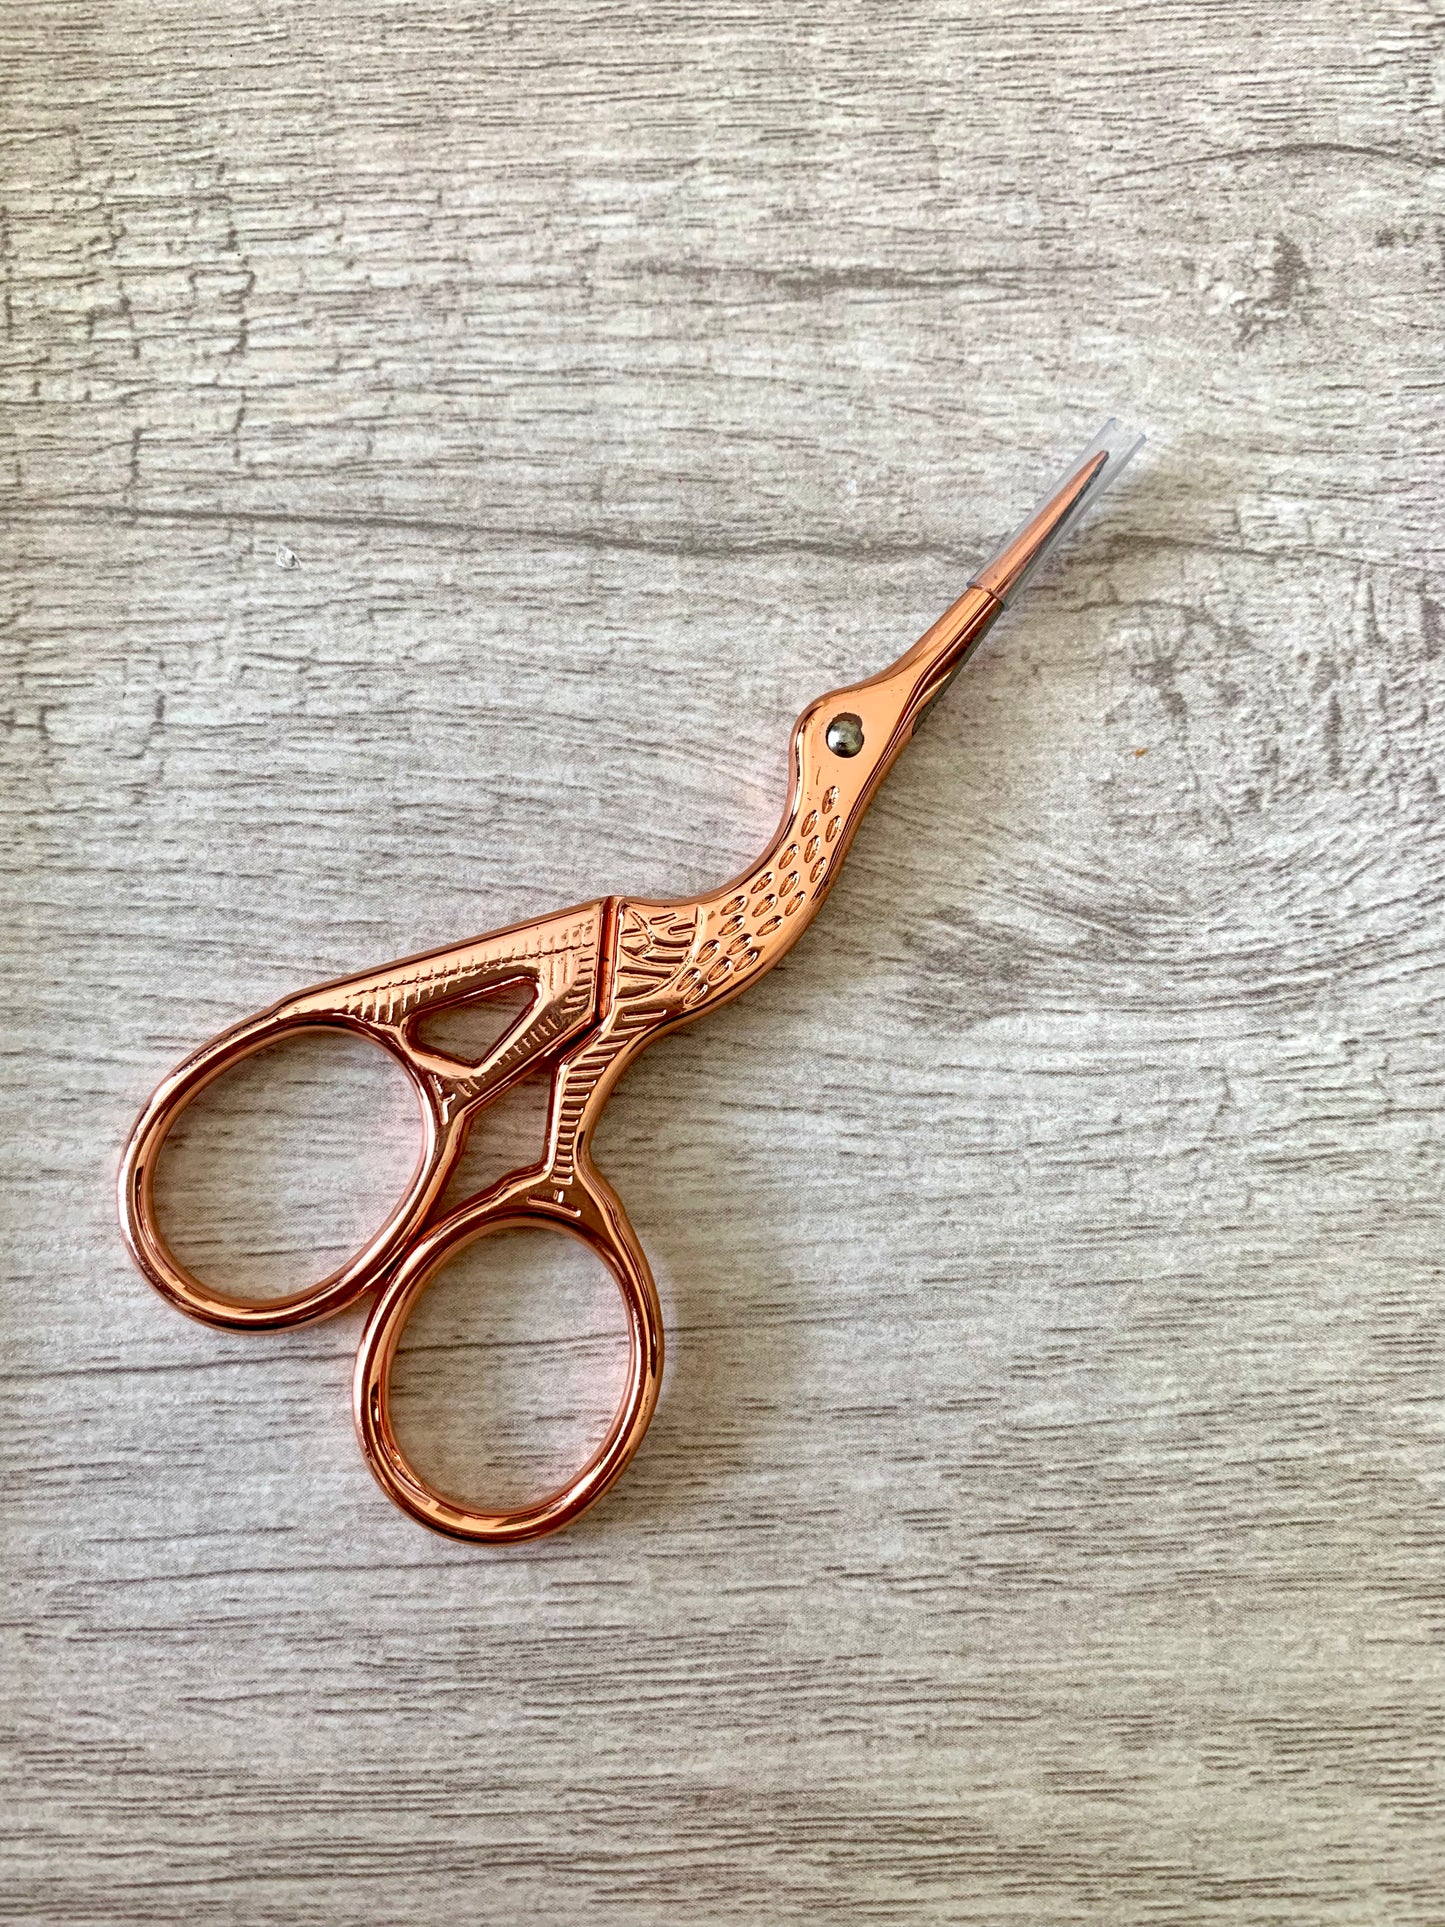 Rose gold bird embroidery scissors